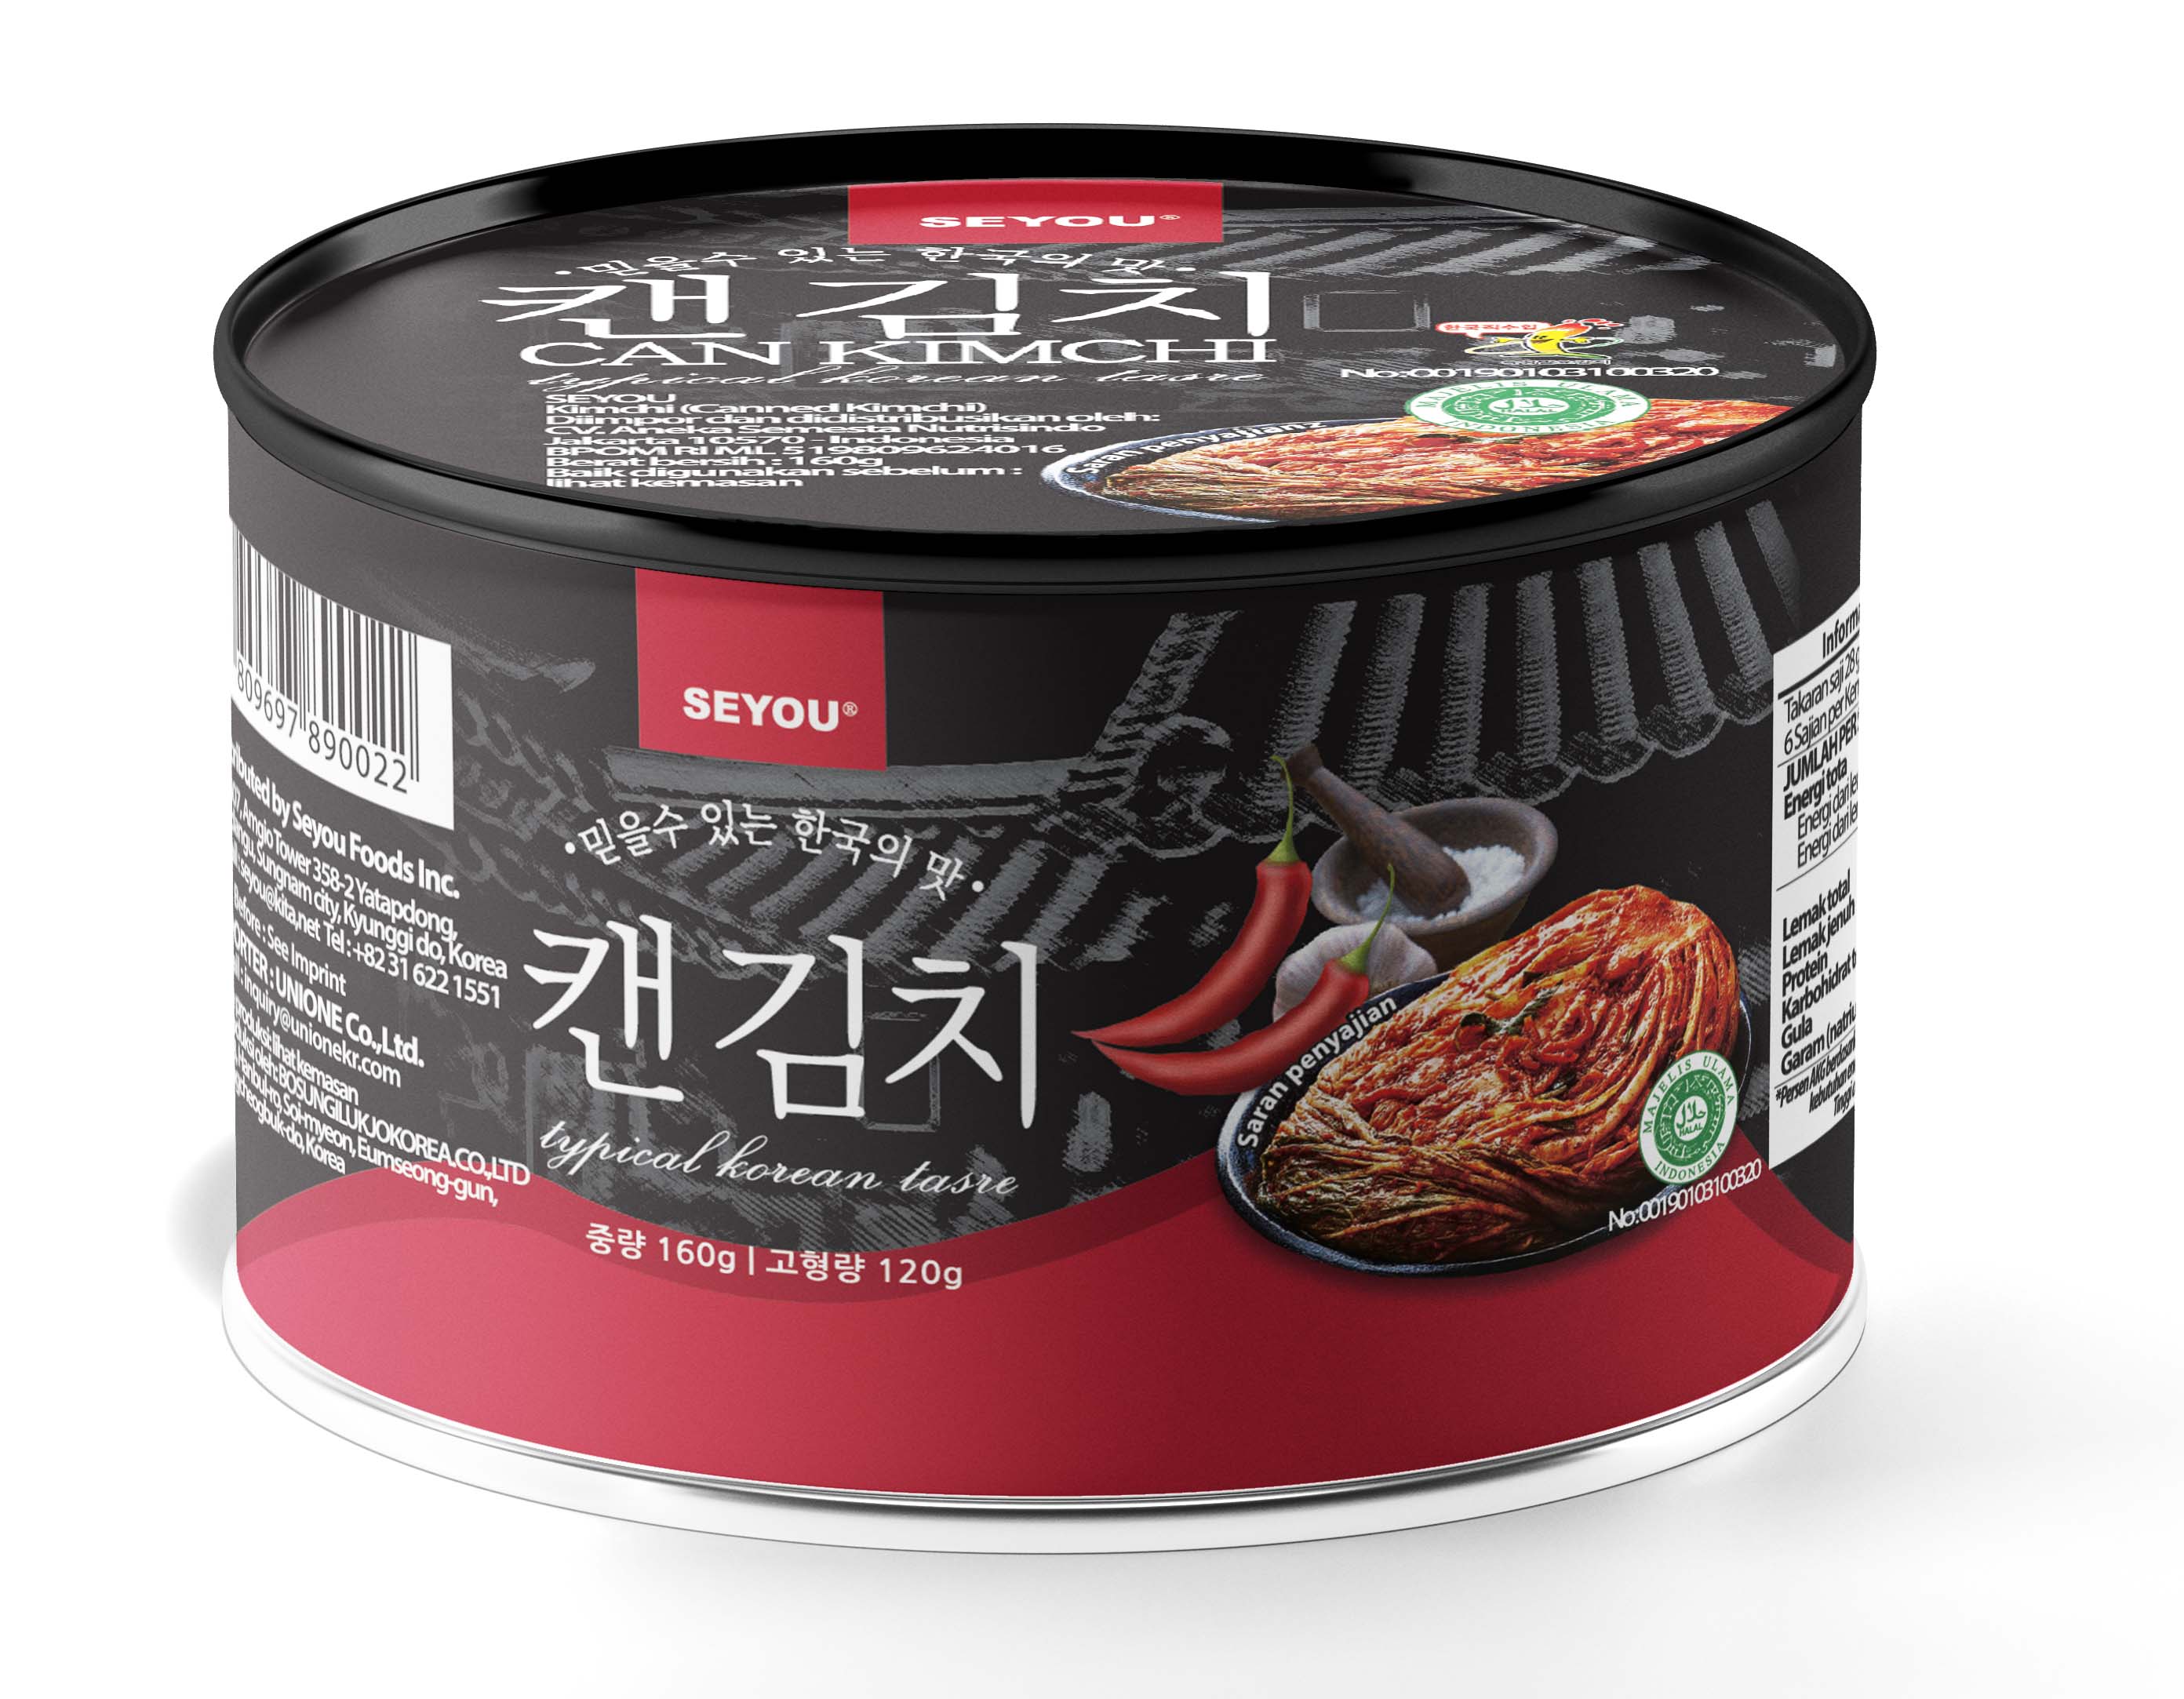 SEYOU Canned Kimchi